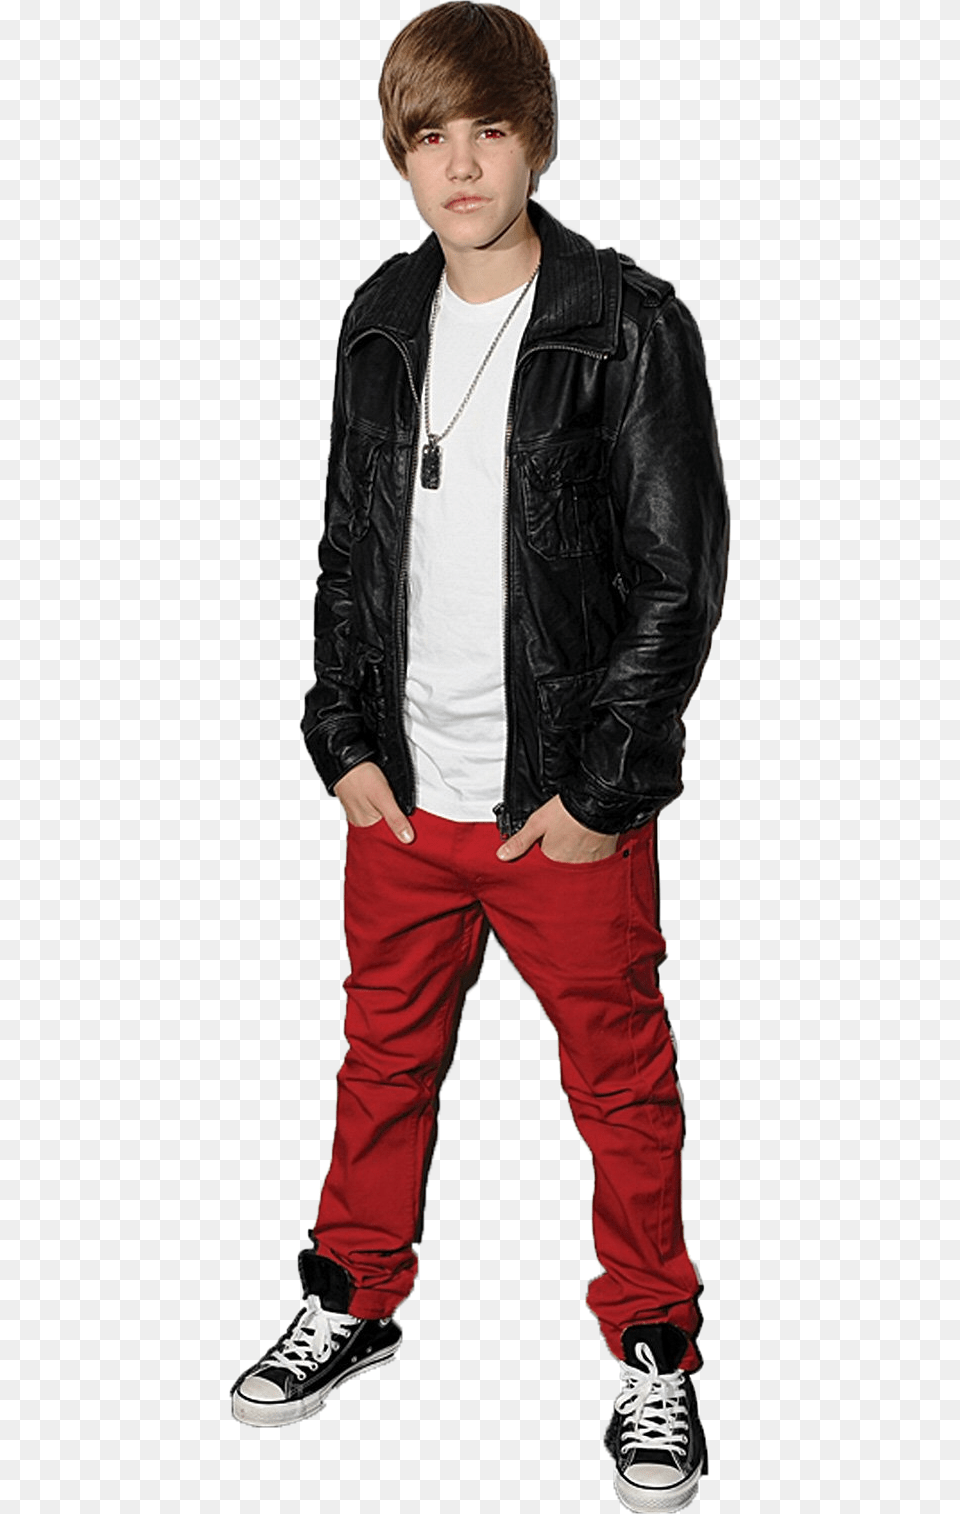 Justin Bieber Sprite 2 Bieber Justin Life Size Stand Up, Footwear, Jacket, Clothing, Coat Png